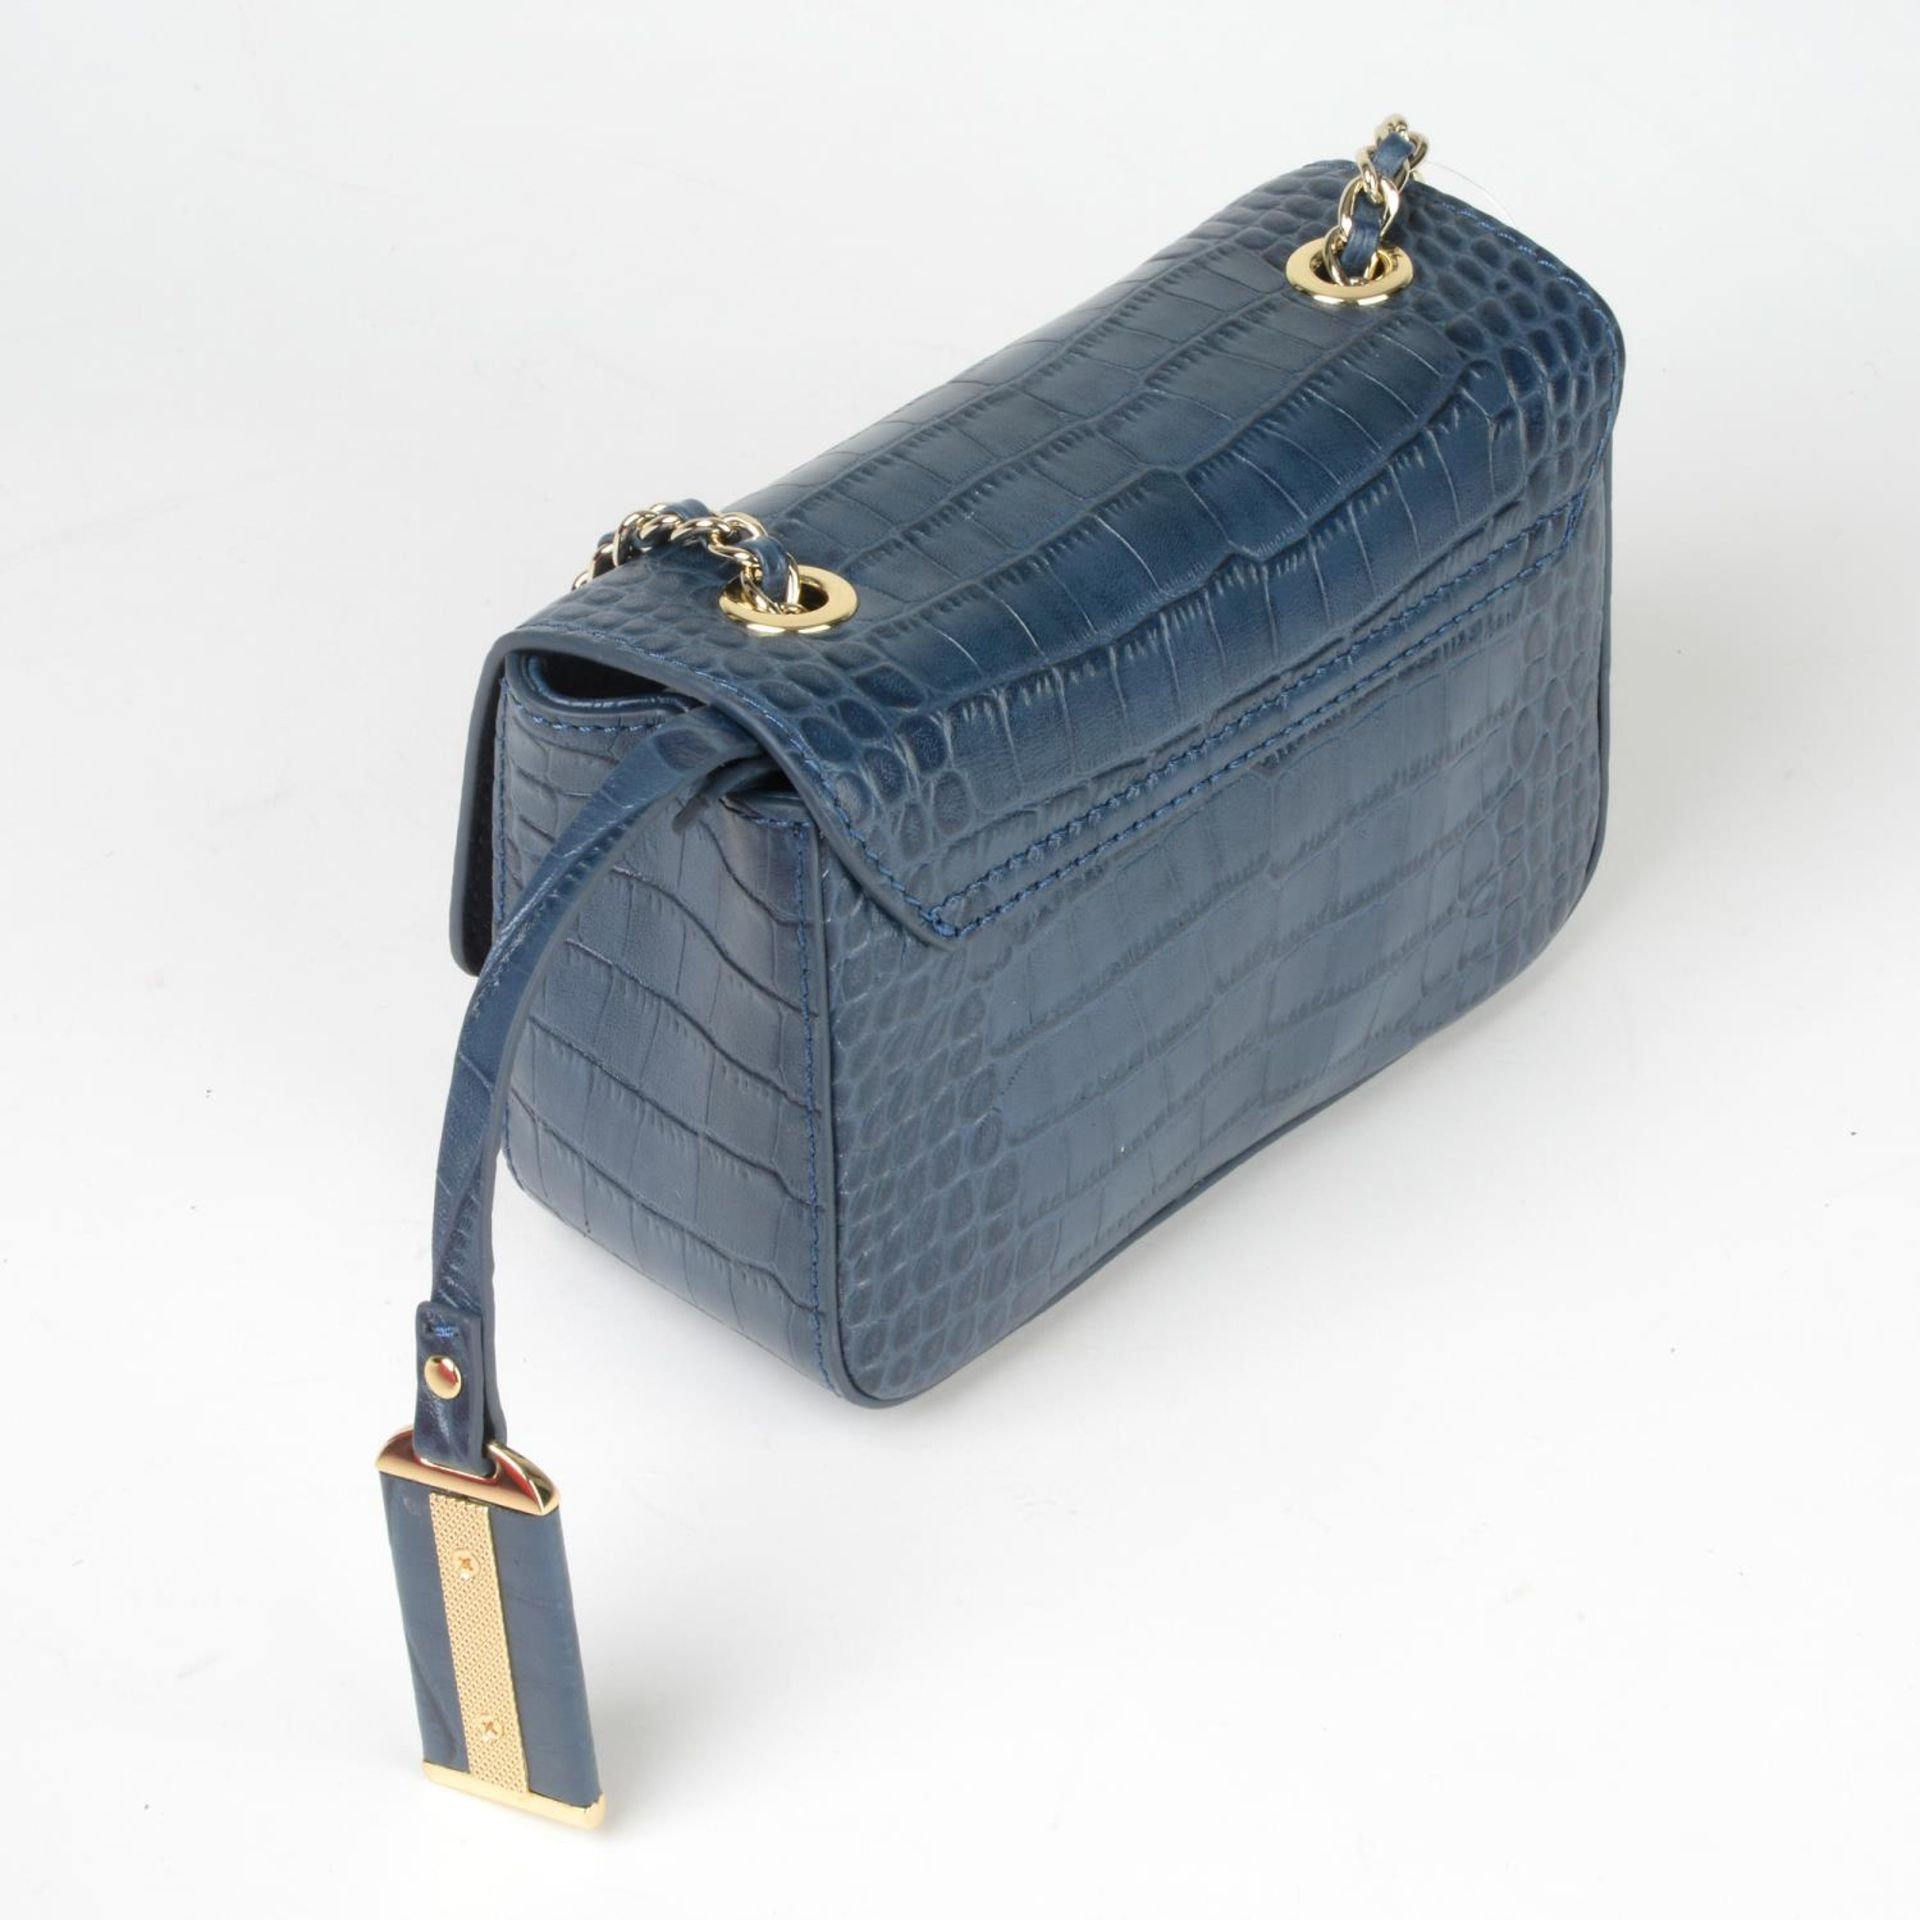 CAVALLO MODA - two leather handbags. - Bild 3 aus 5